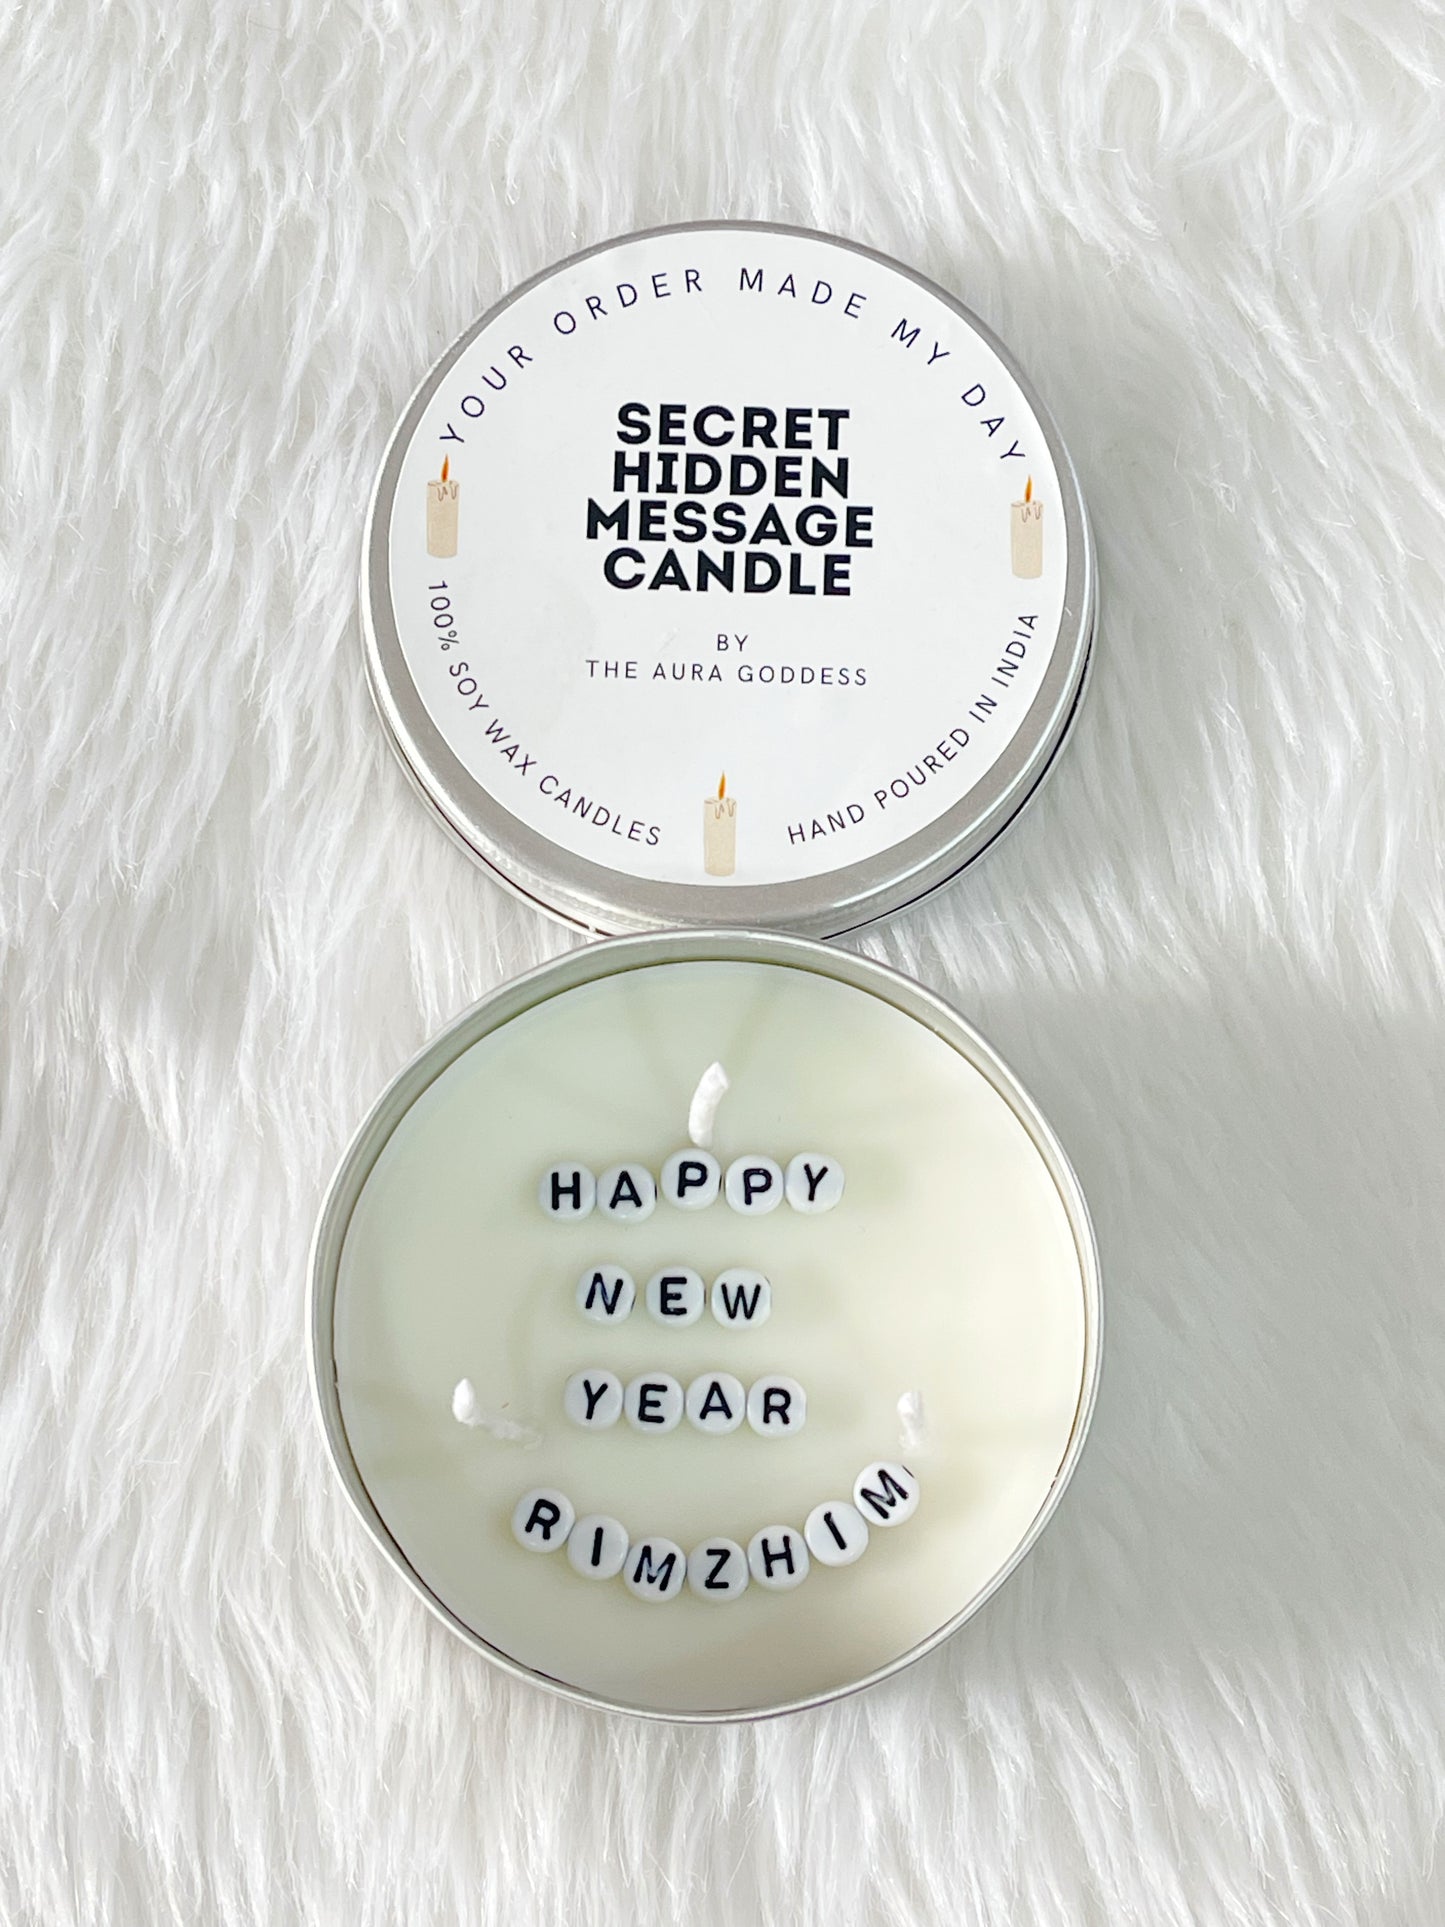 Secret hidden message candle